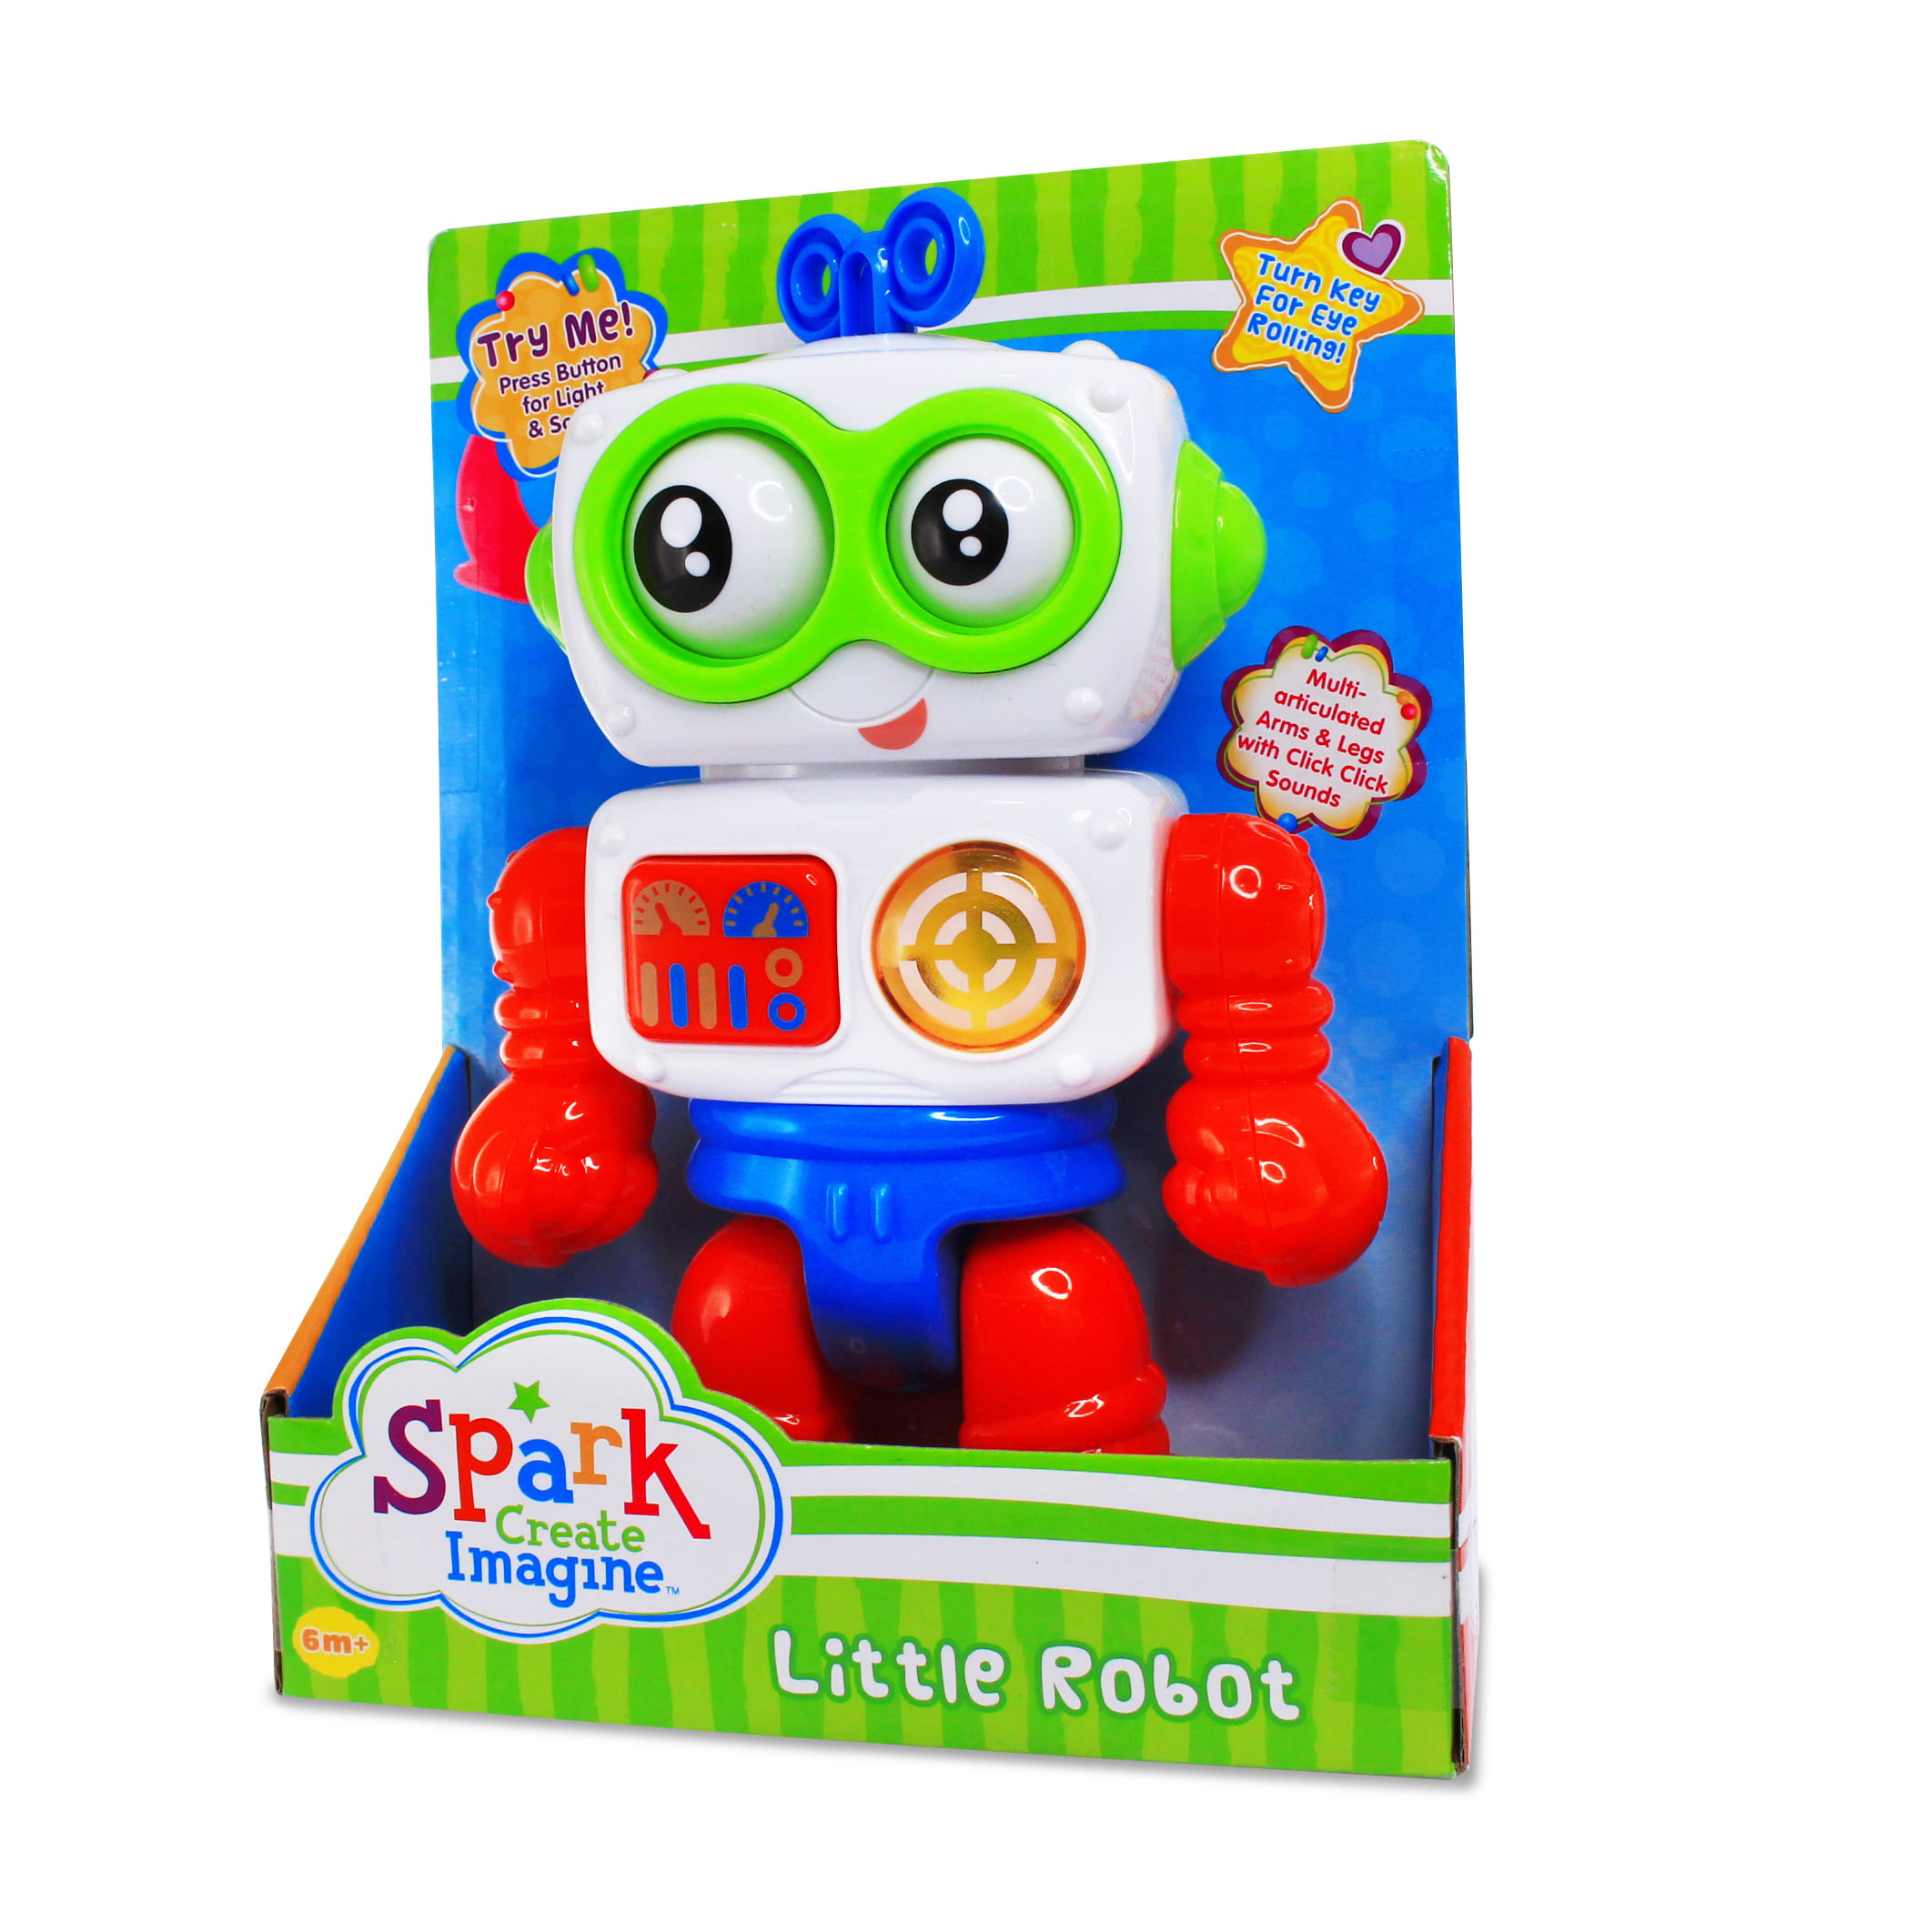 Spark Create Imagine Little Robot Toy 